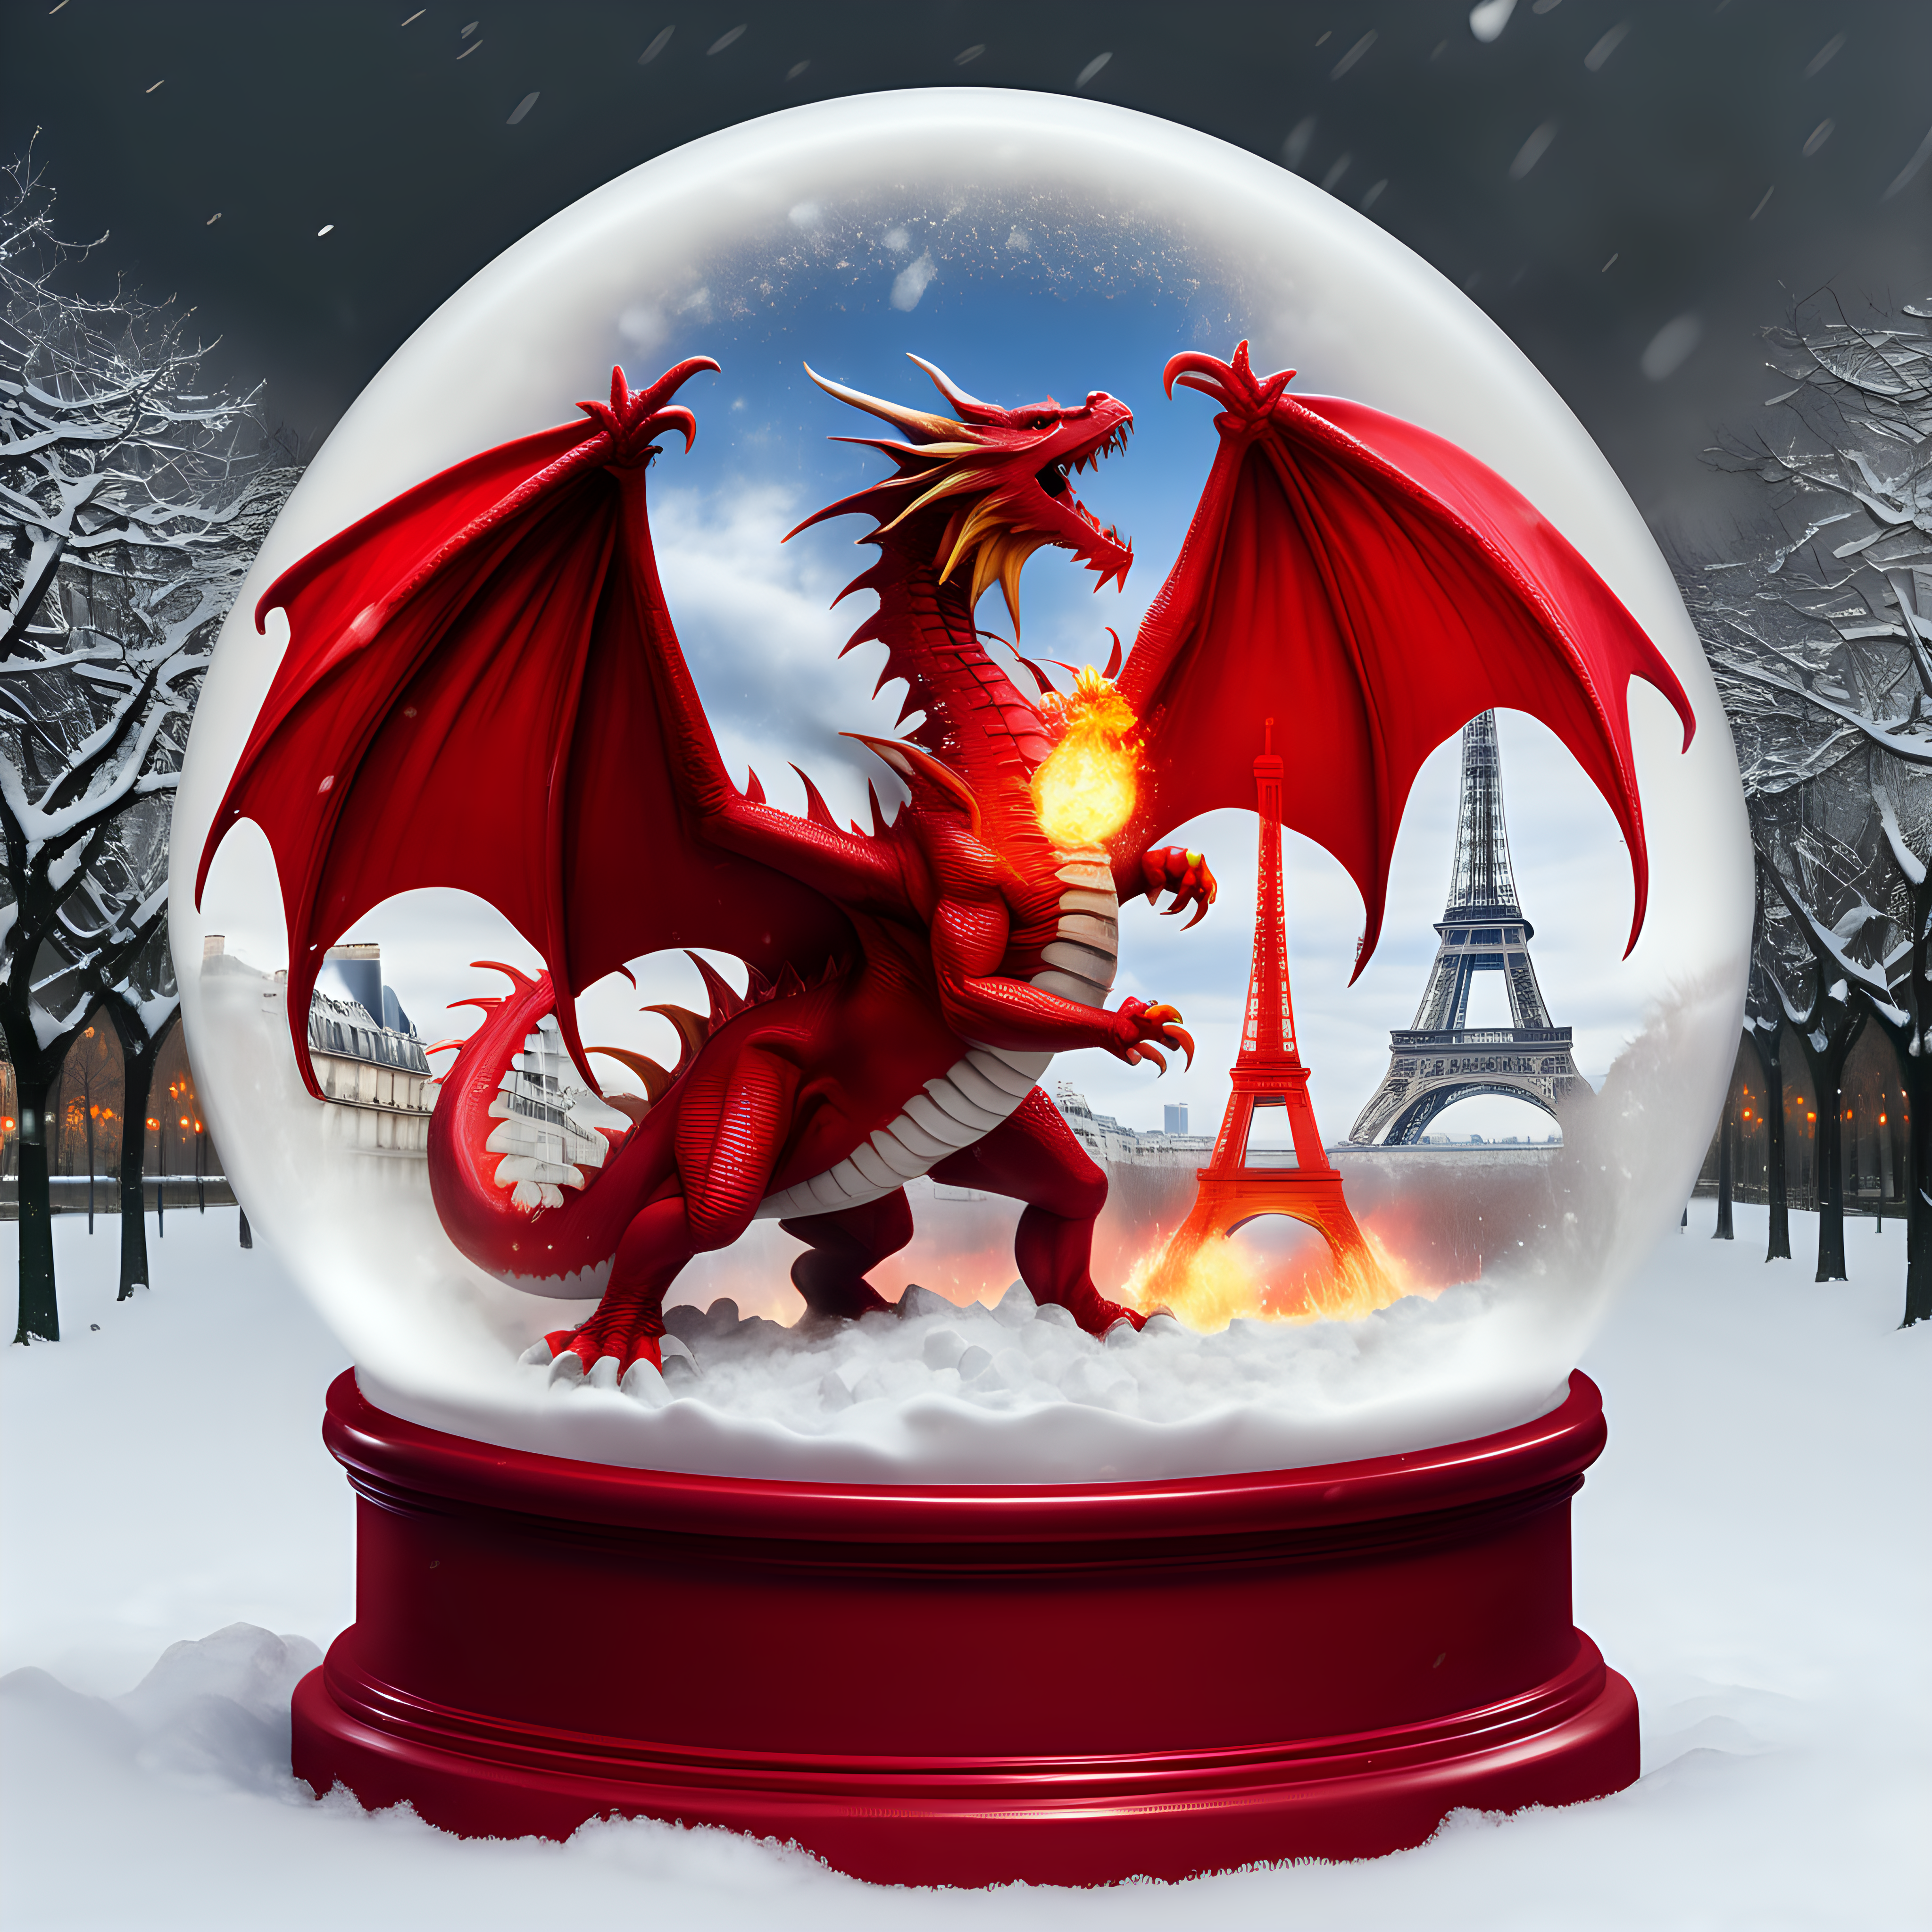 red 2 headed fire breathing dragon destroying Paris in a snow globe